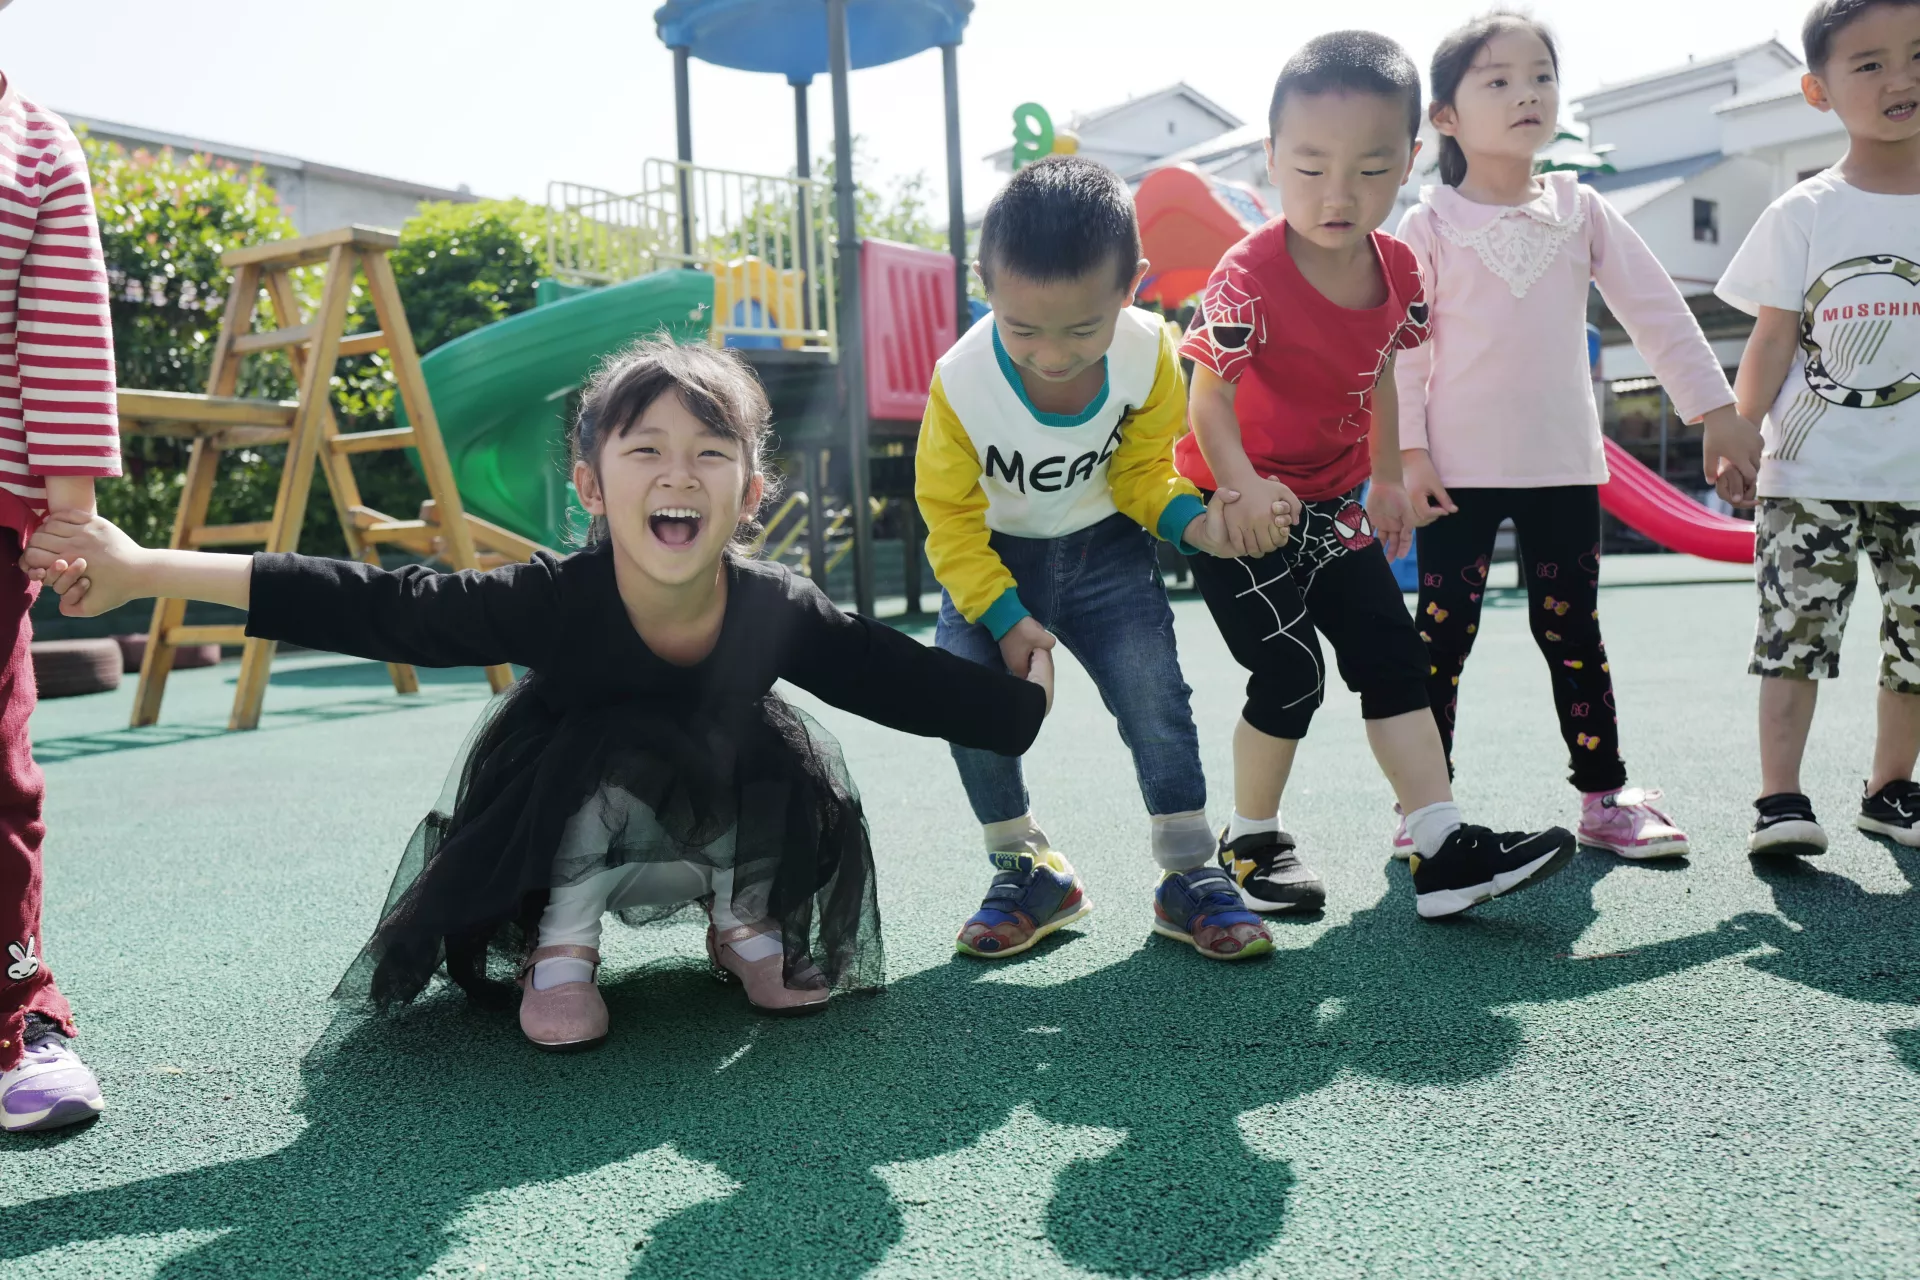 Children in the Yelang Village Kindergarten play games at the playground.